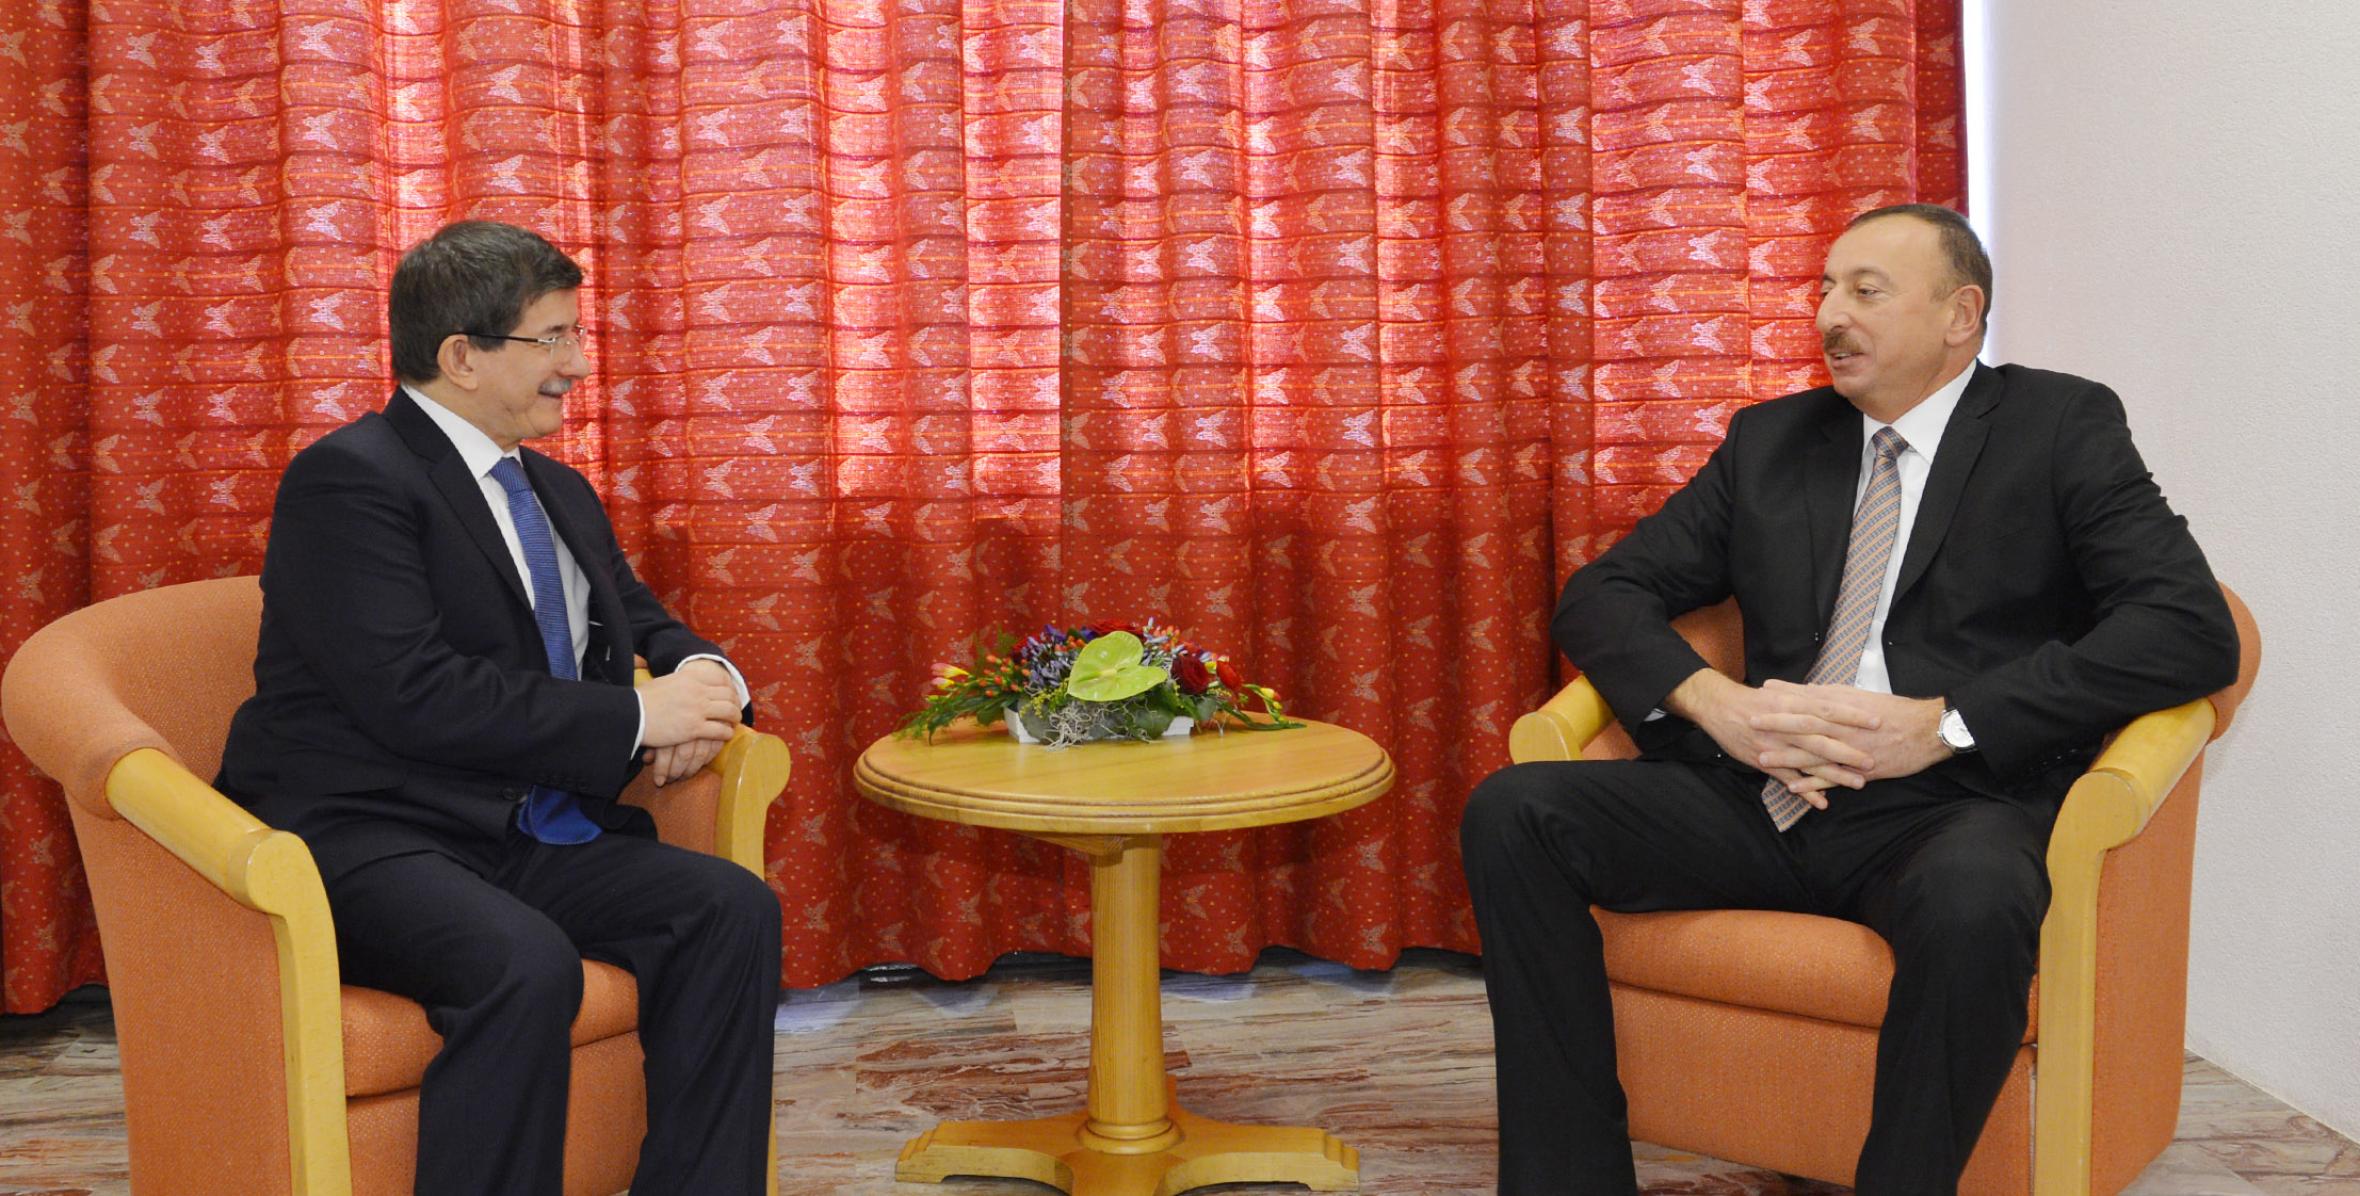 Ilham Aliyev met with Turkish Foreign Minister Ahmet Davutloglu